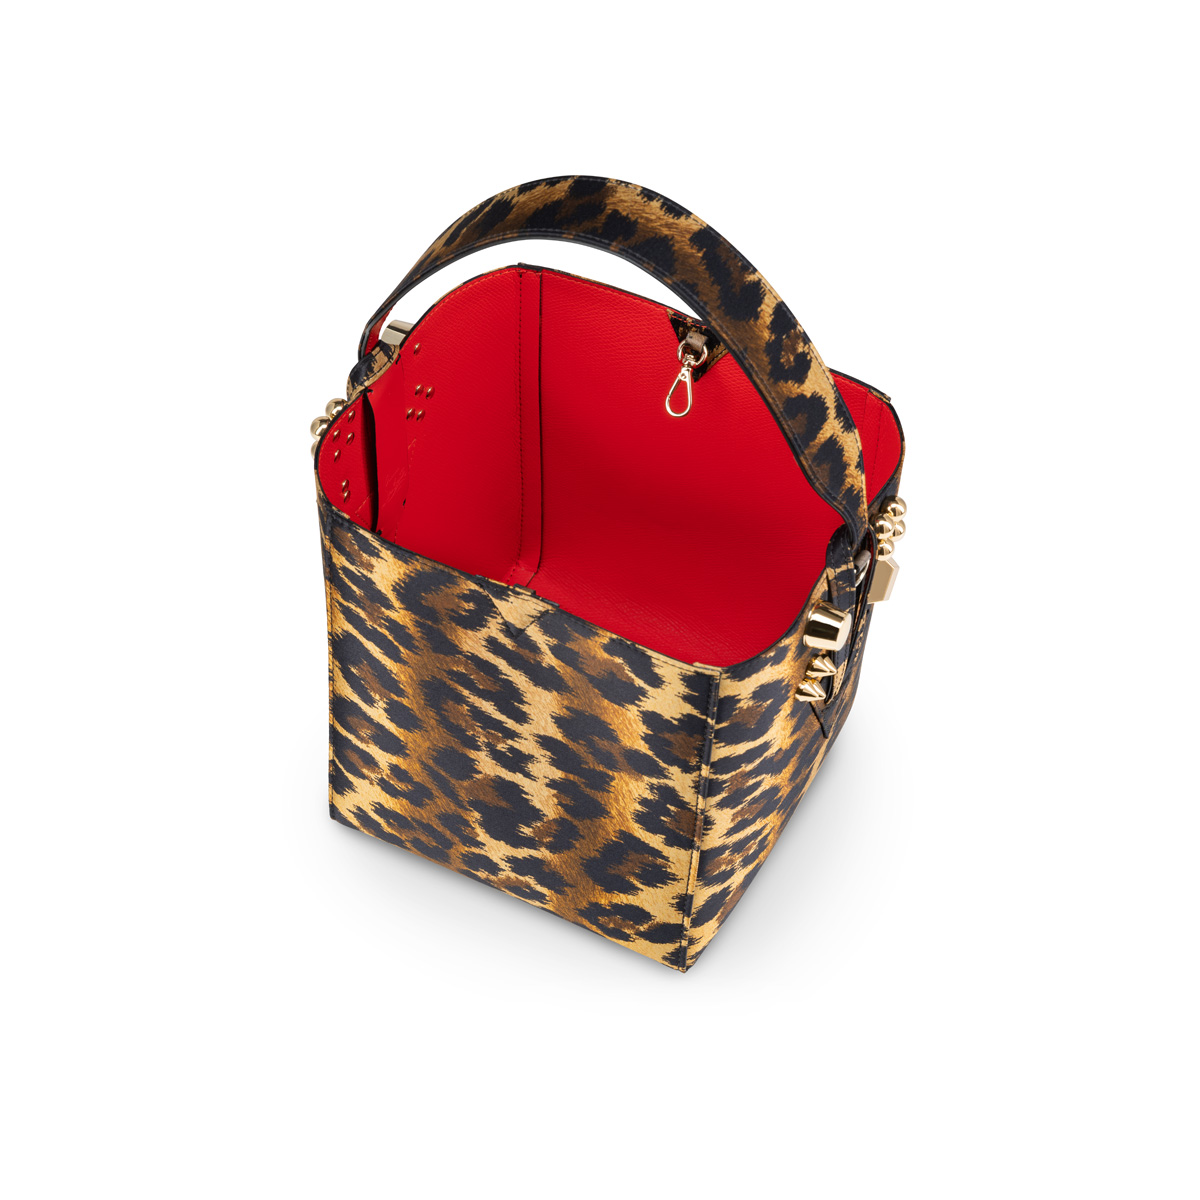 Cassia Leopard Print Patent Mini Bag